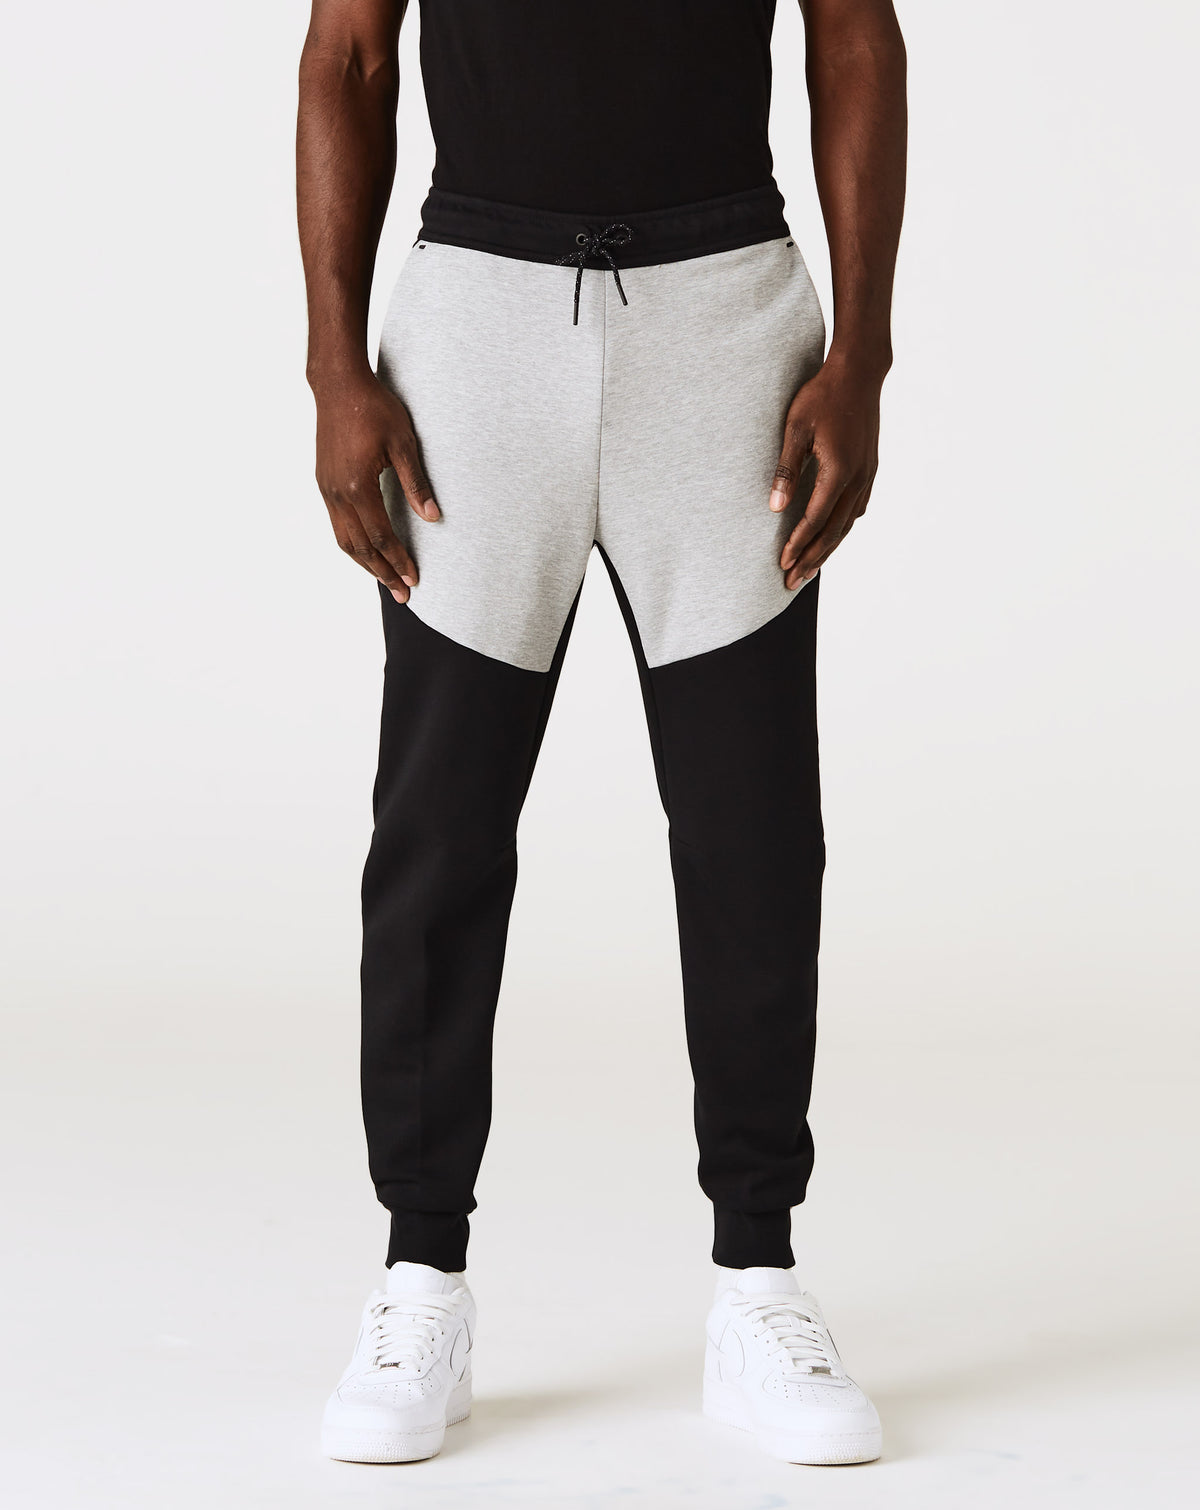 Nike Tech Fleece Pants - Rule of Next Apparel